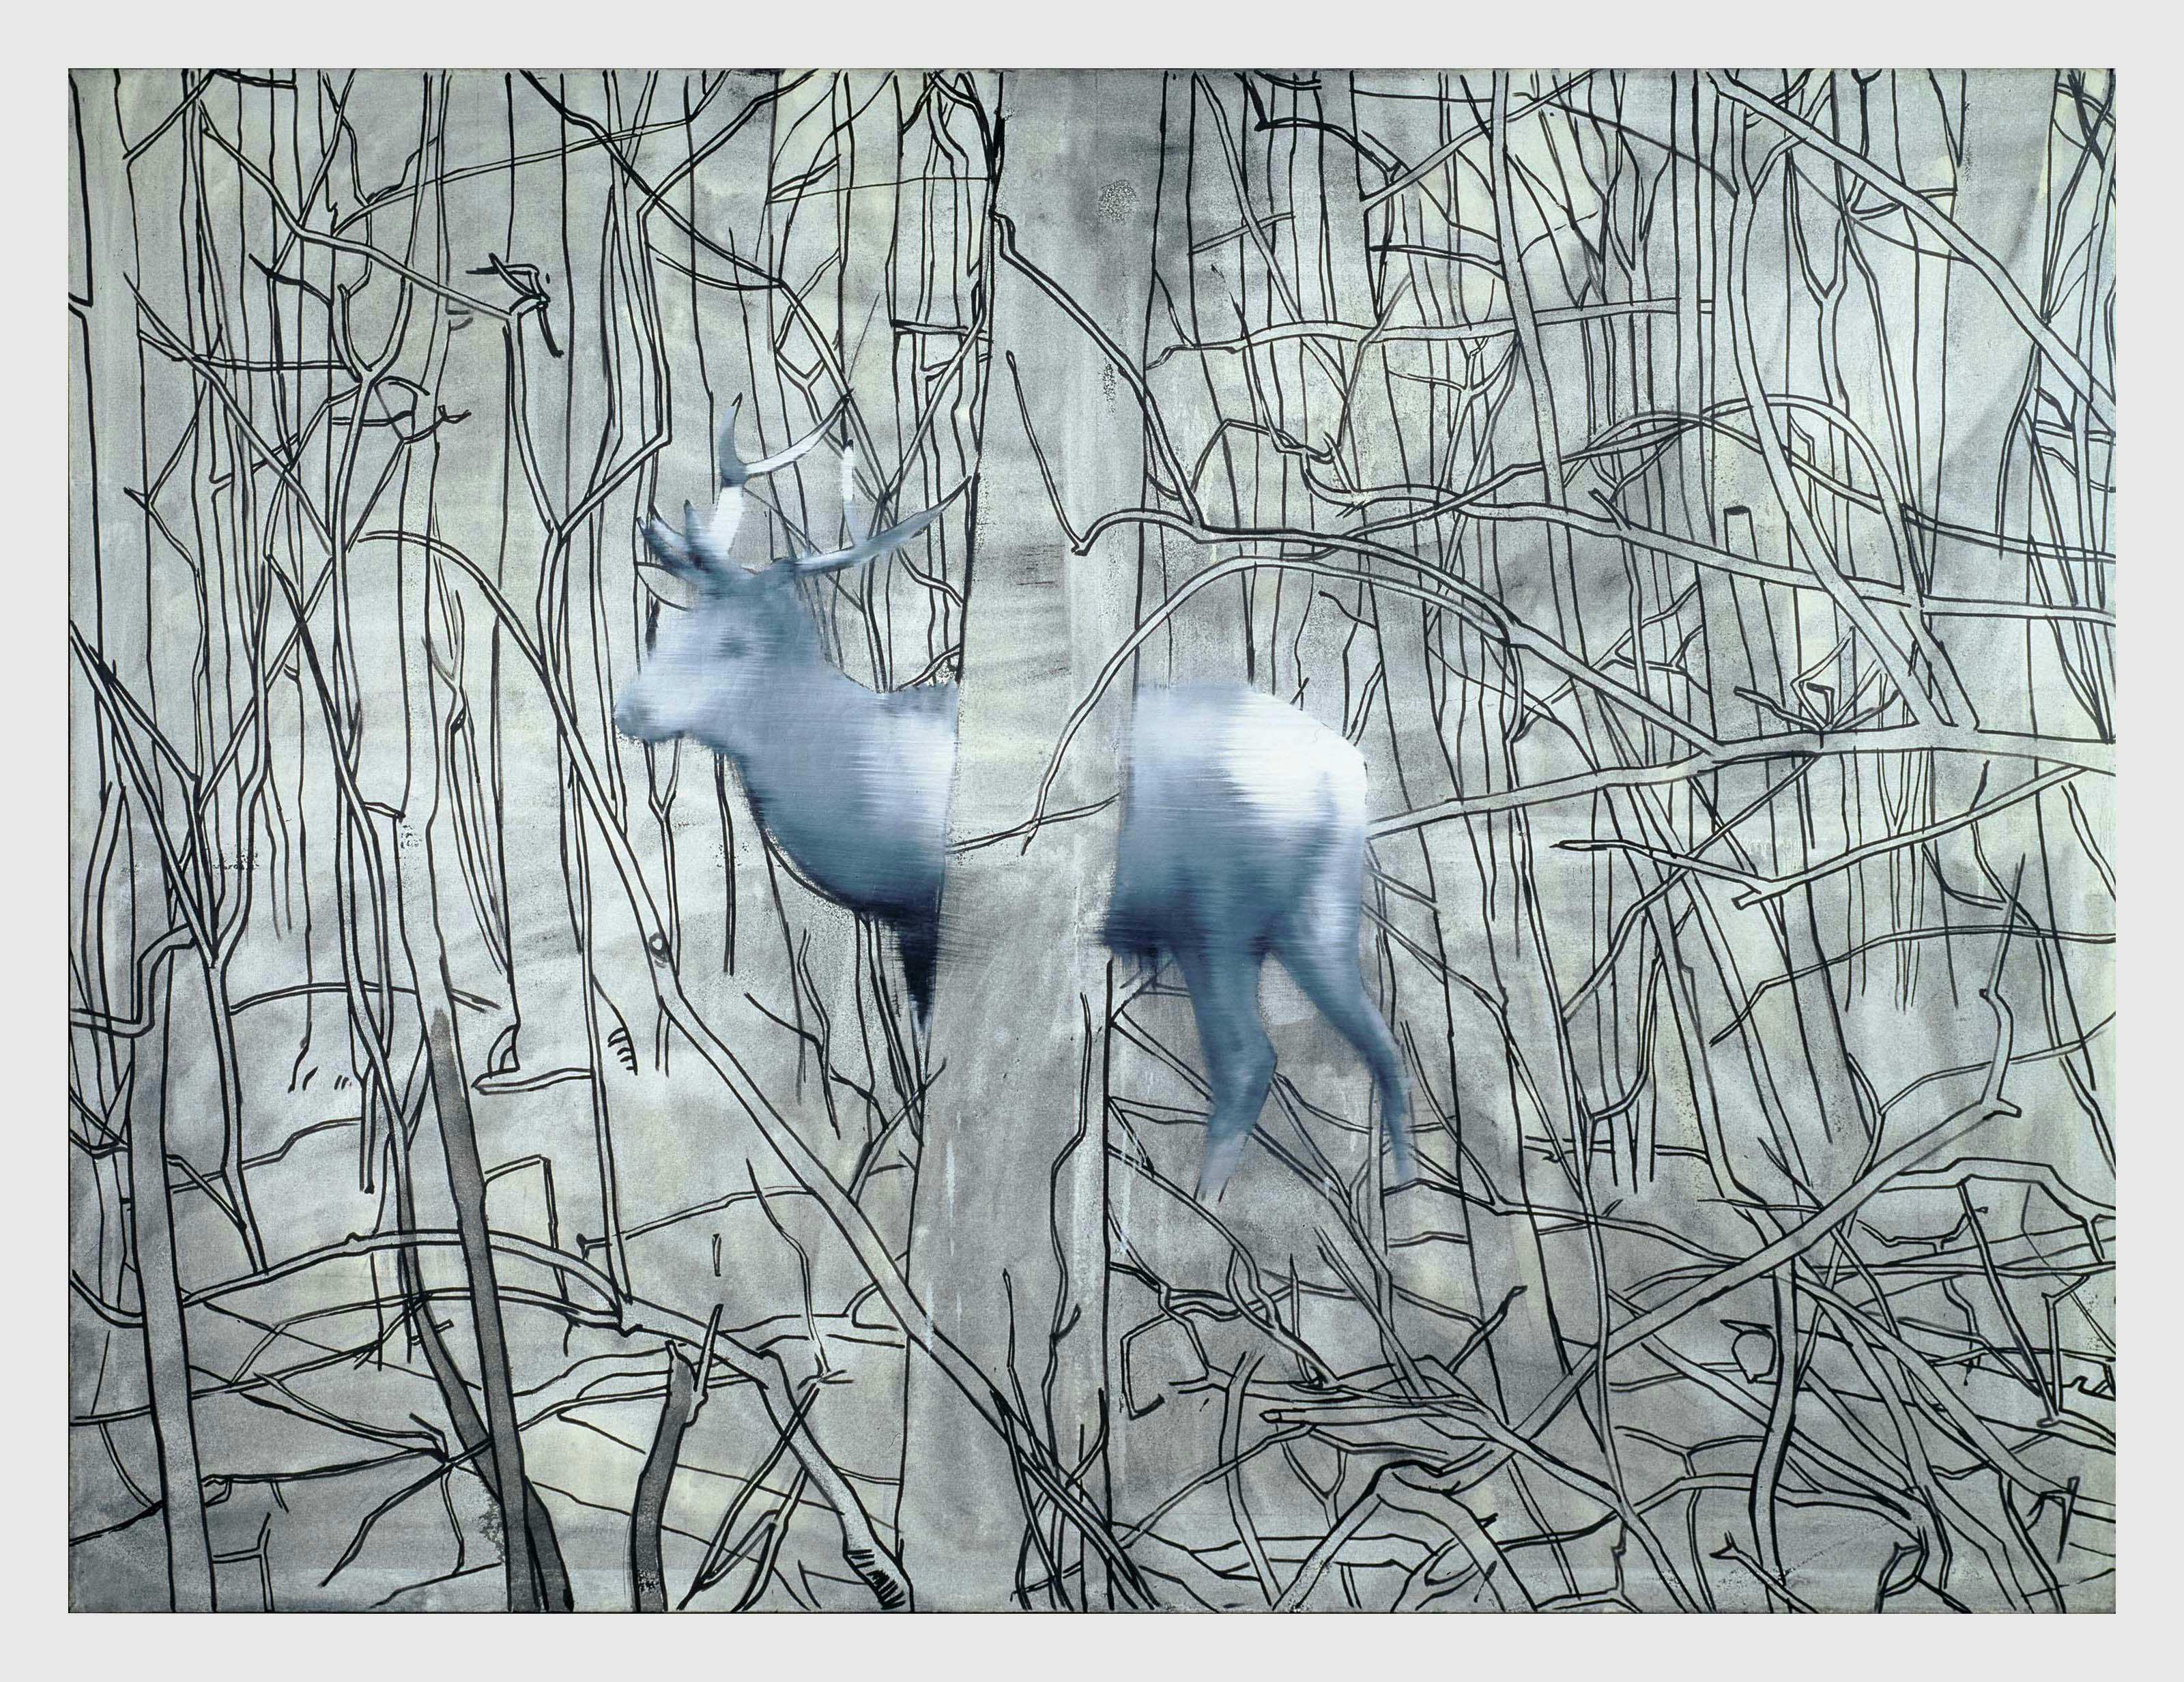 A painting by Gerhard Richter, titled Hirsch (Deer), dated 1963.